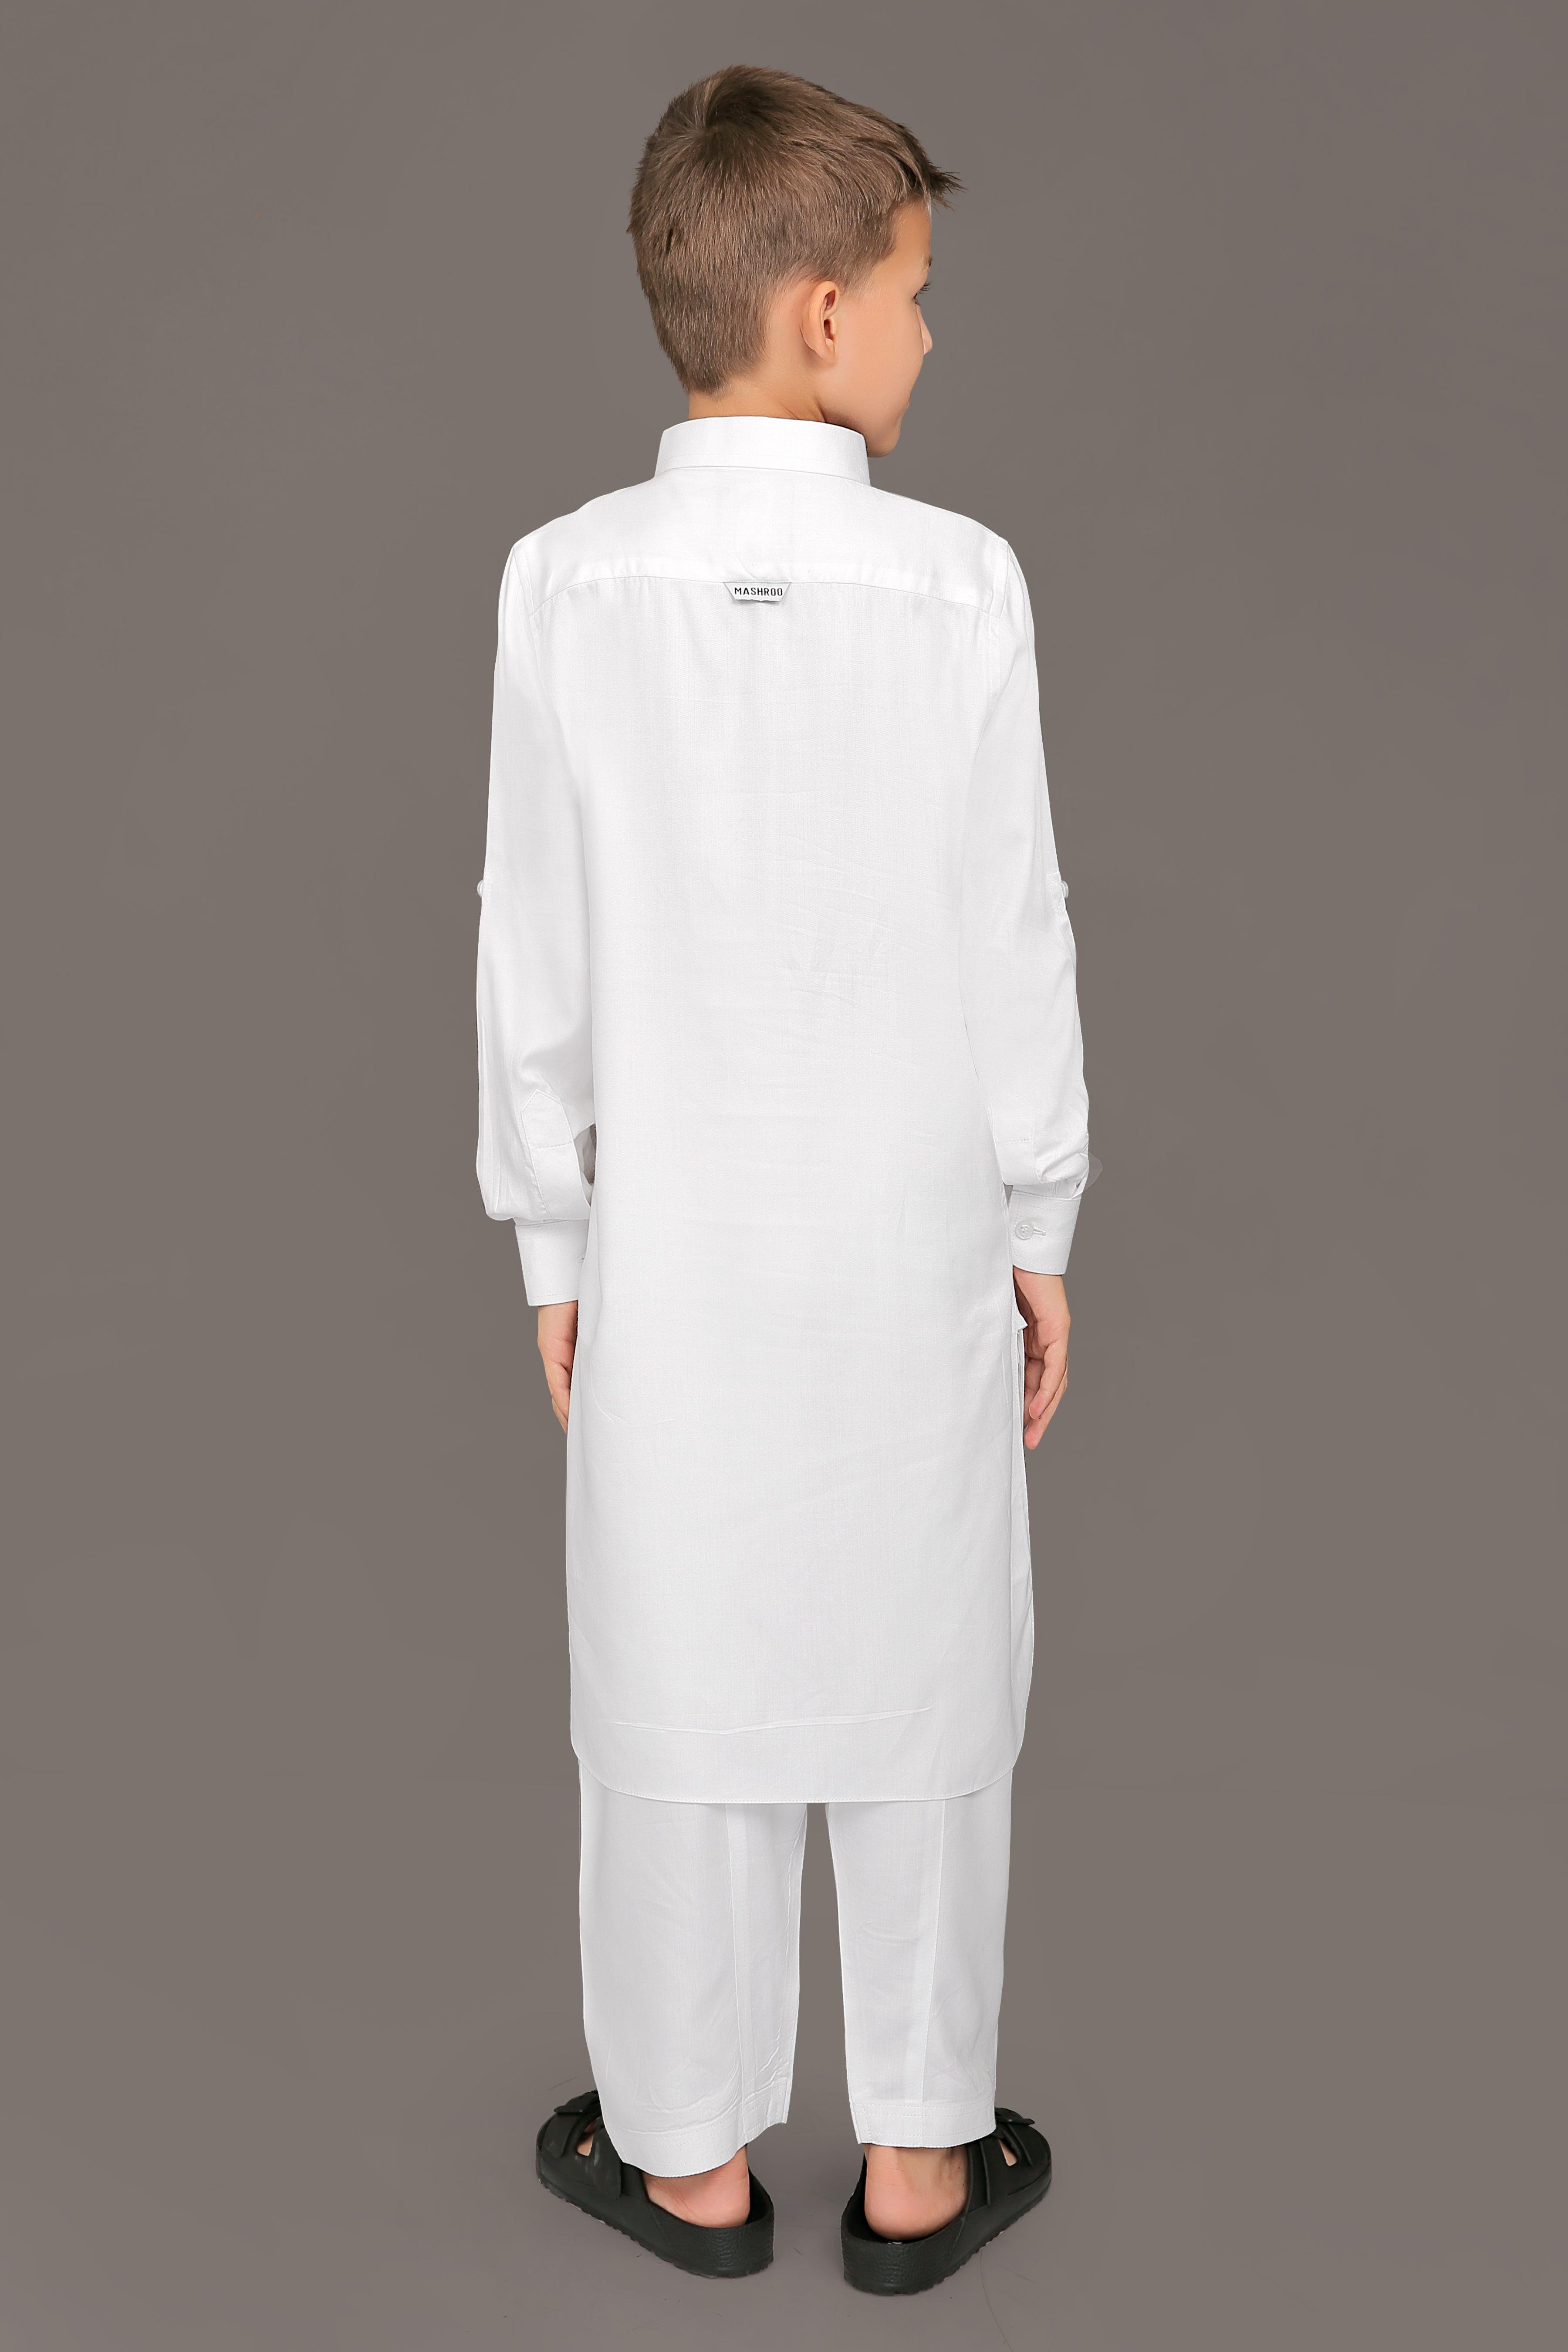 Oday White Pathani Suit for Boys - Mashroo